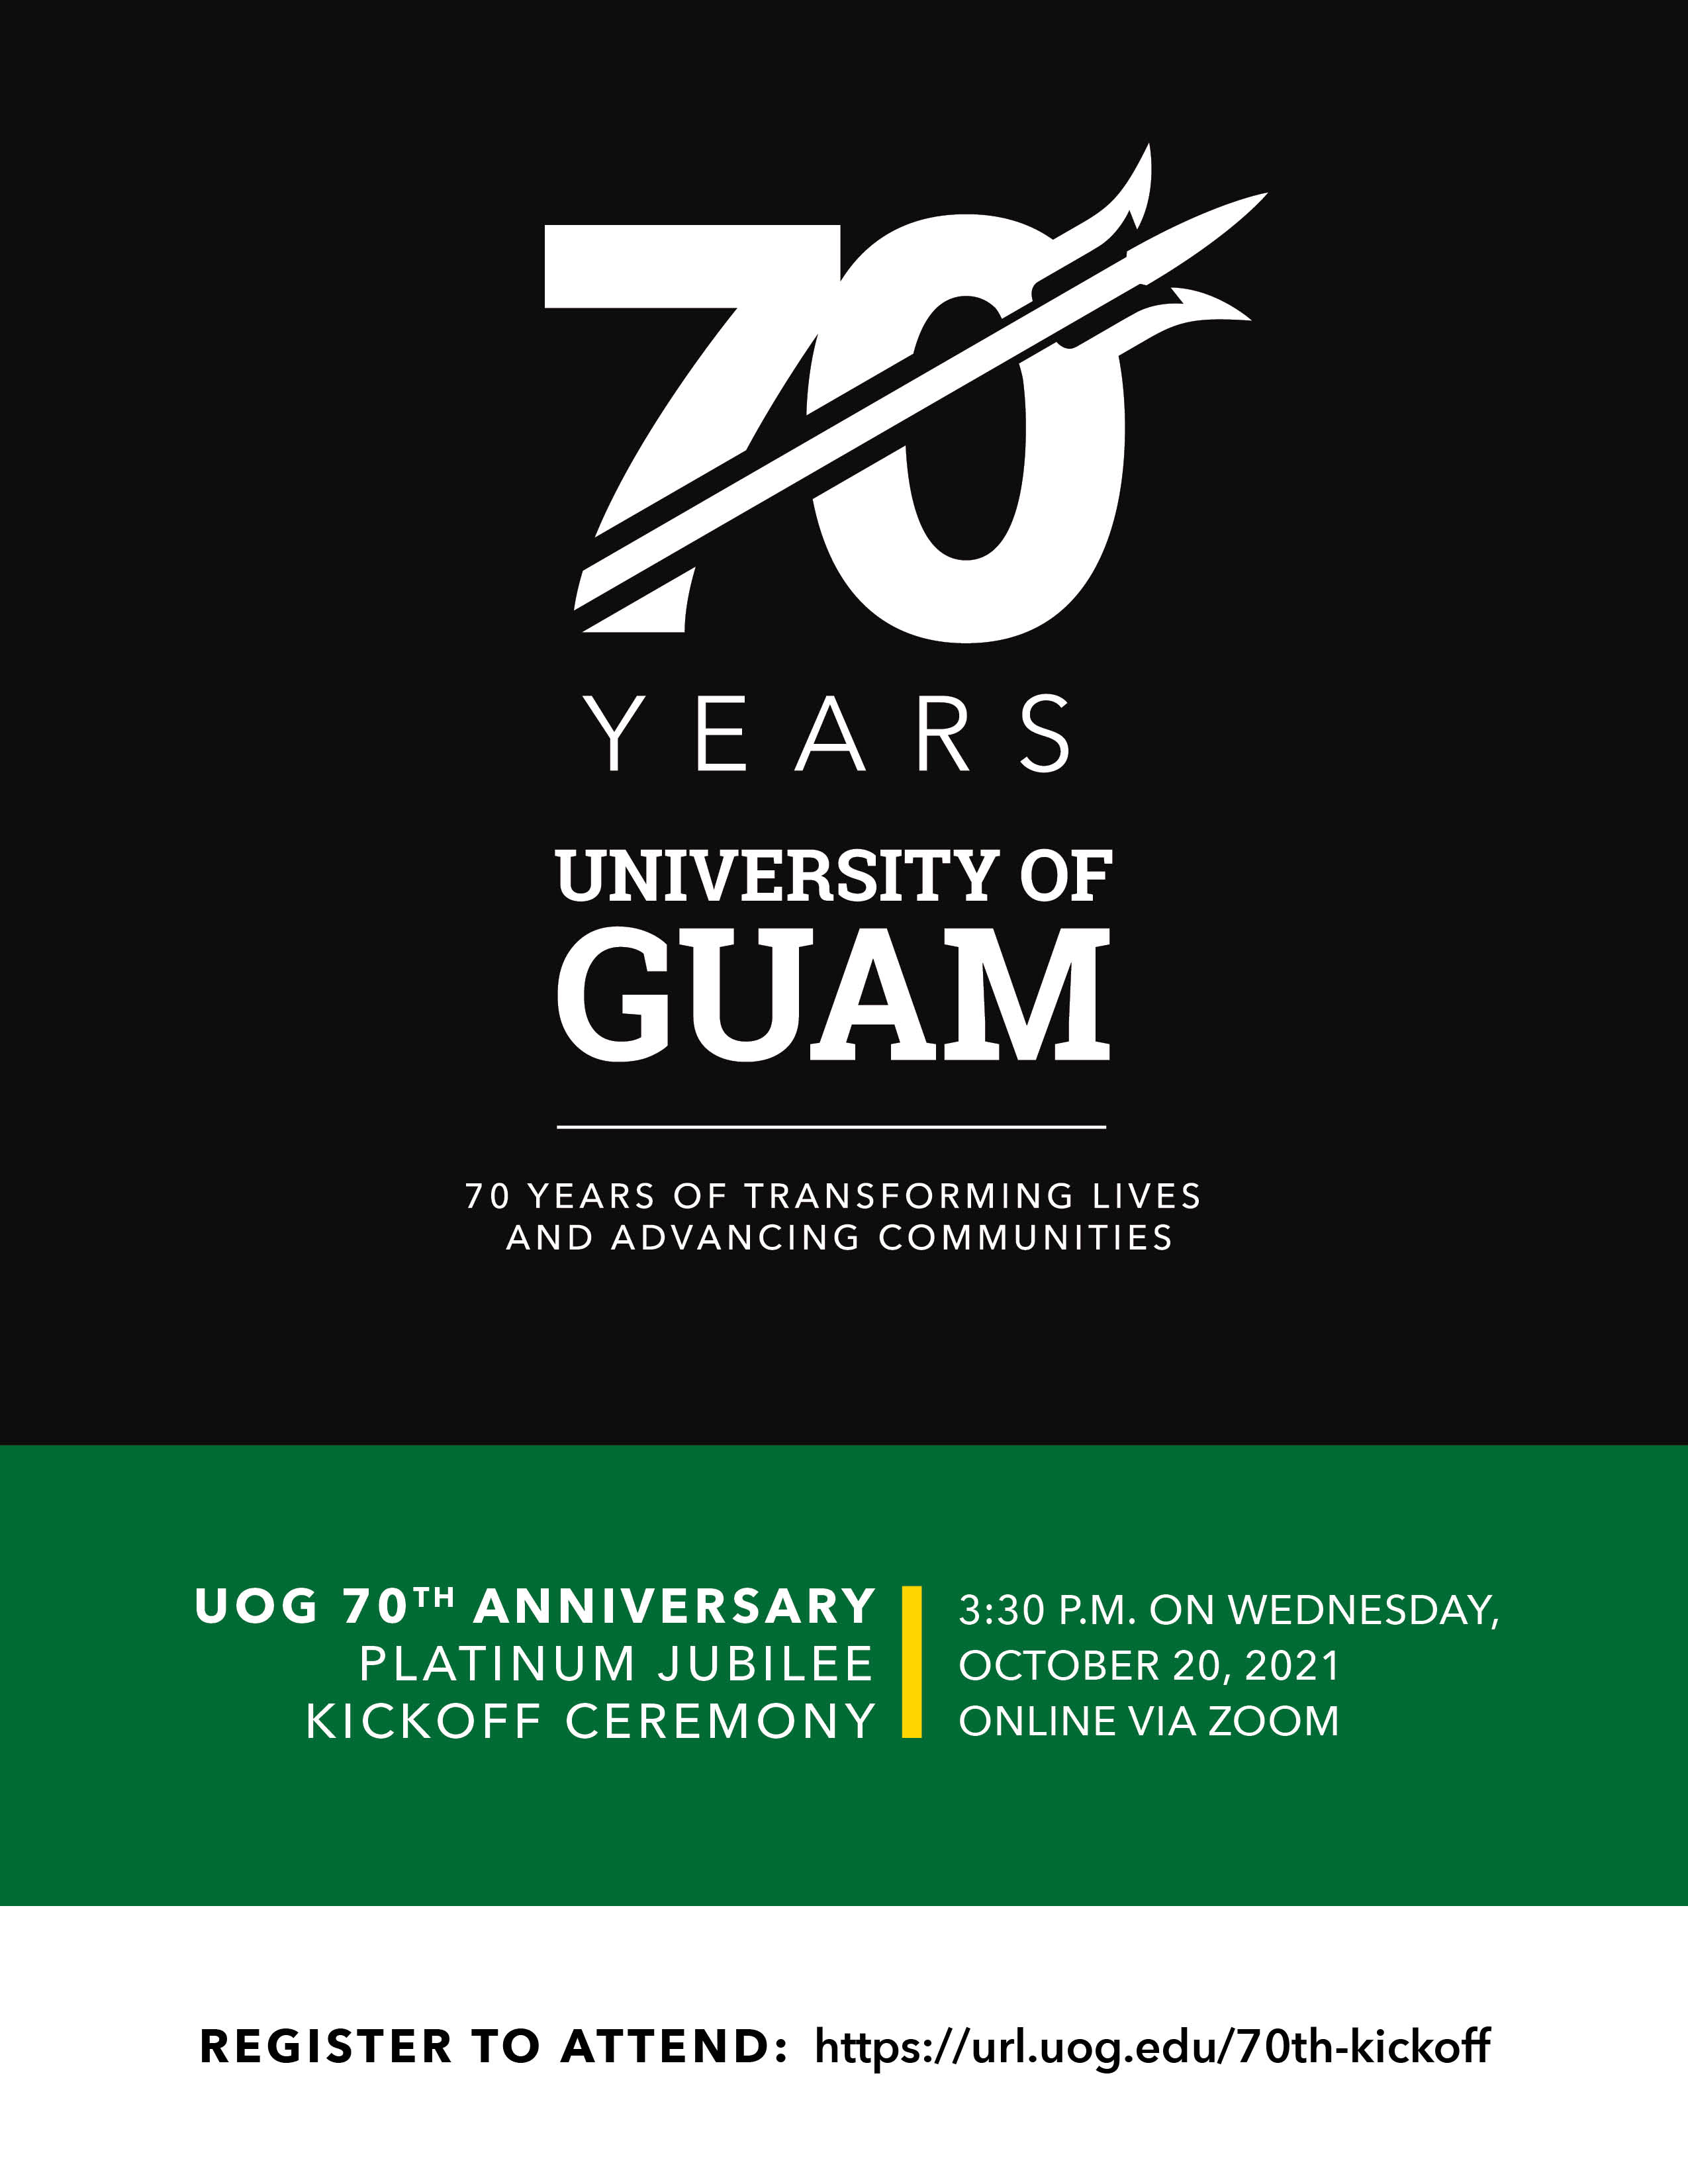 University of Guam's Platinum Jubilee Kickoff Ceremony